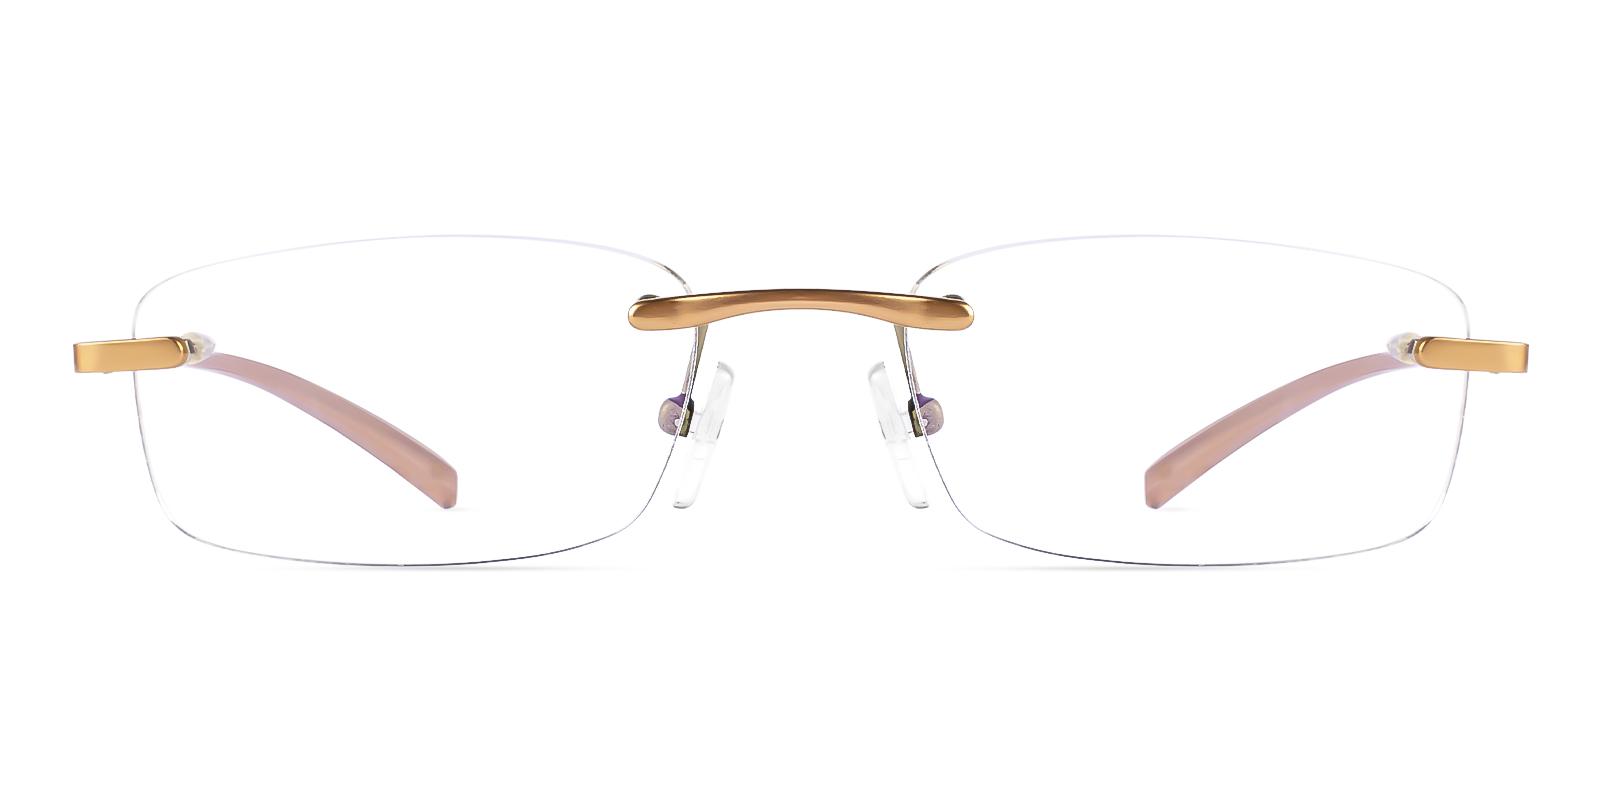 Othe Rosegold Metal Eyeglasses , NosePads , SpringHinges Frames from ABBE Glasses